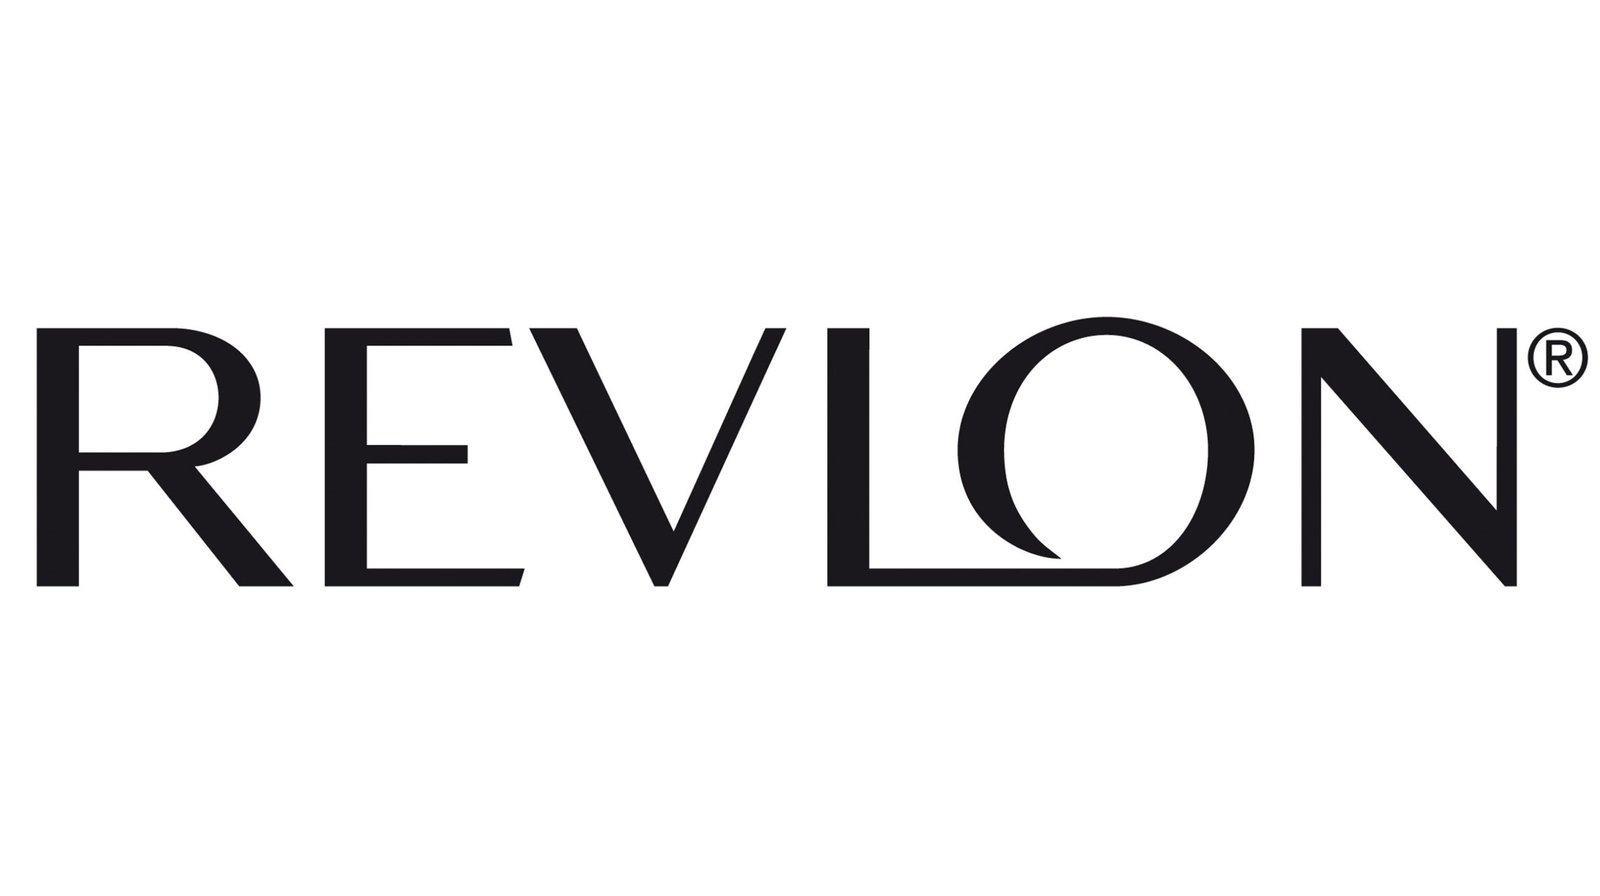 SWOT analysis of Revlon